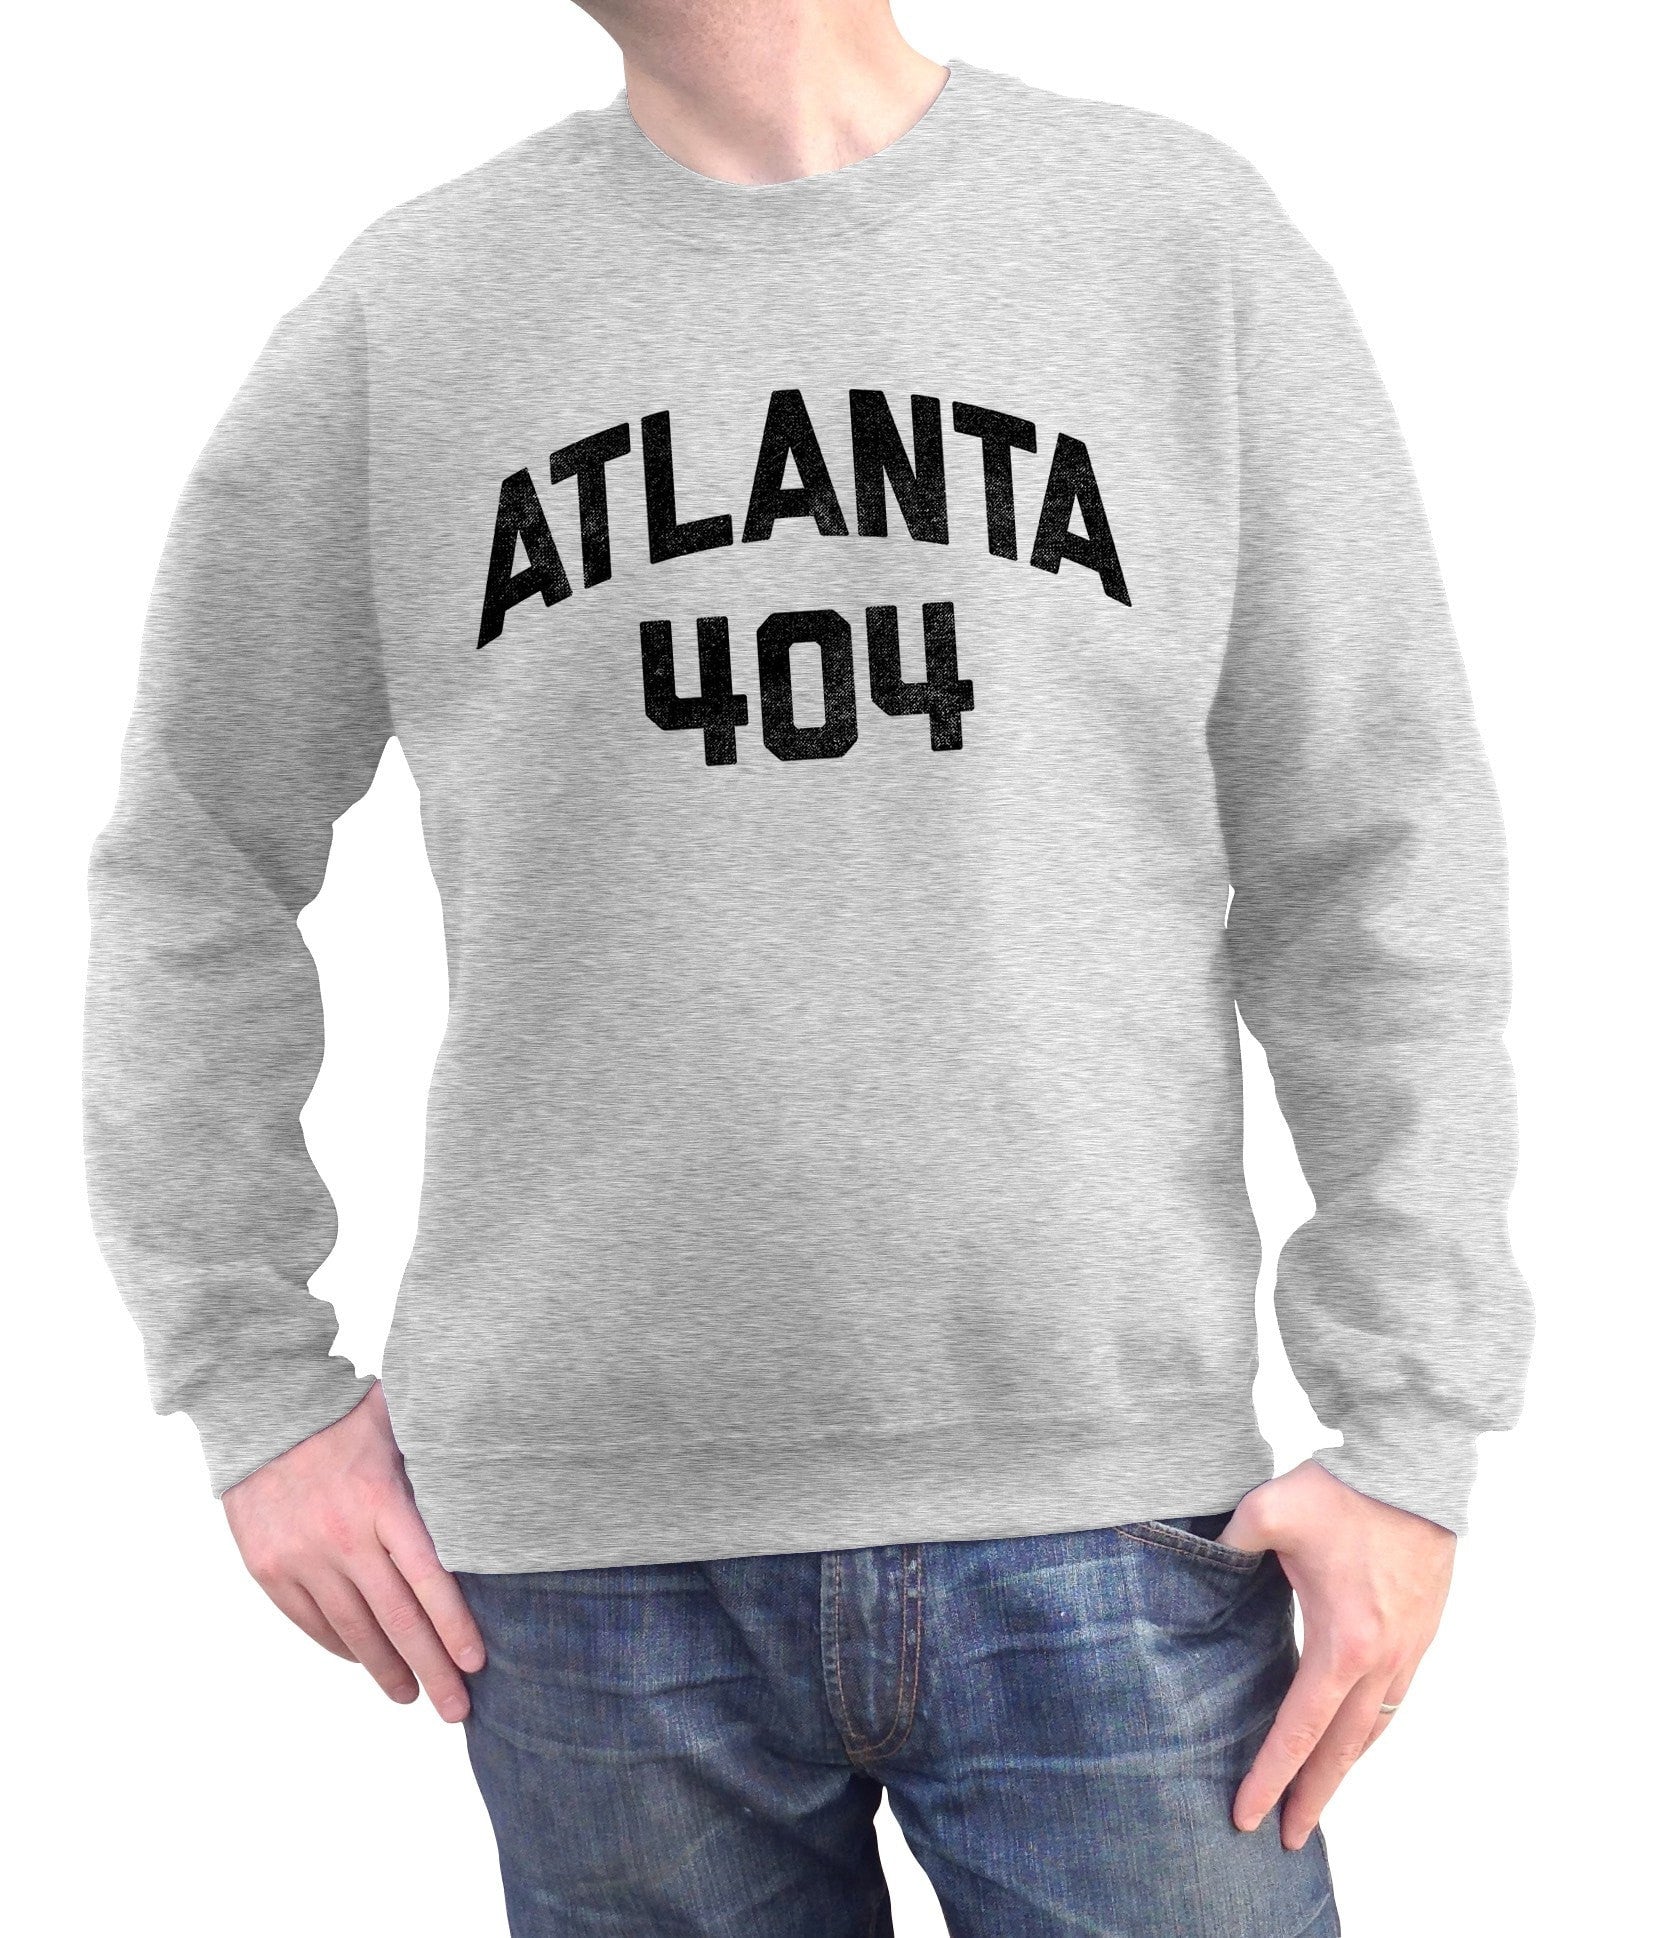 Unisex Atlanta 404 Area Code Sweatshirt